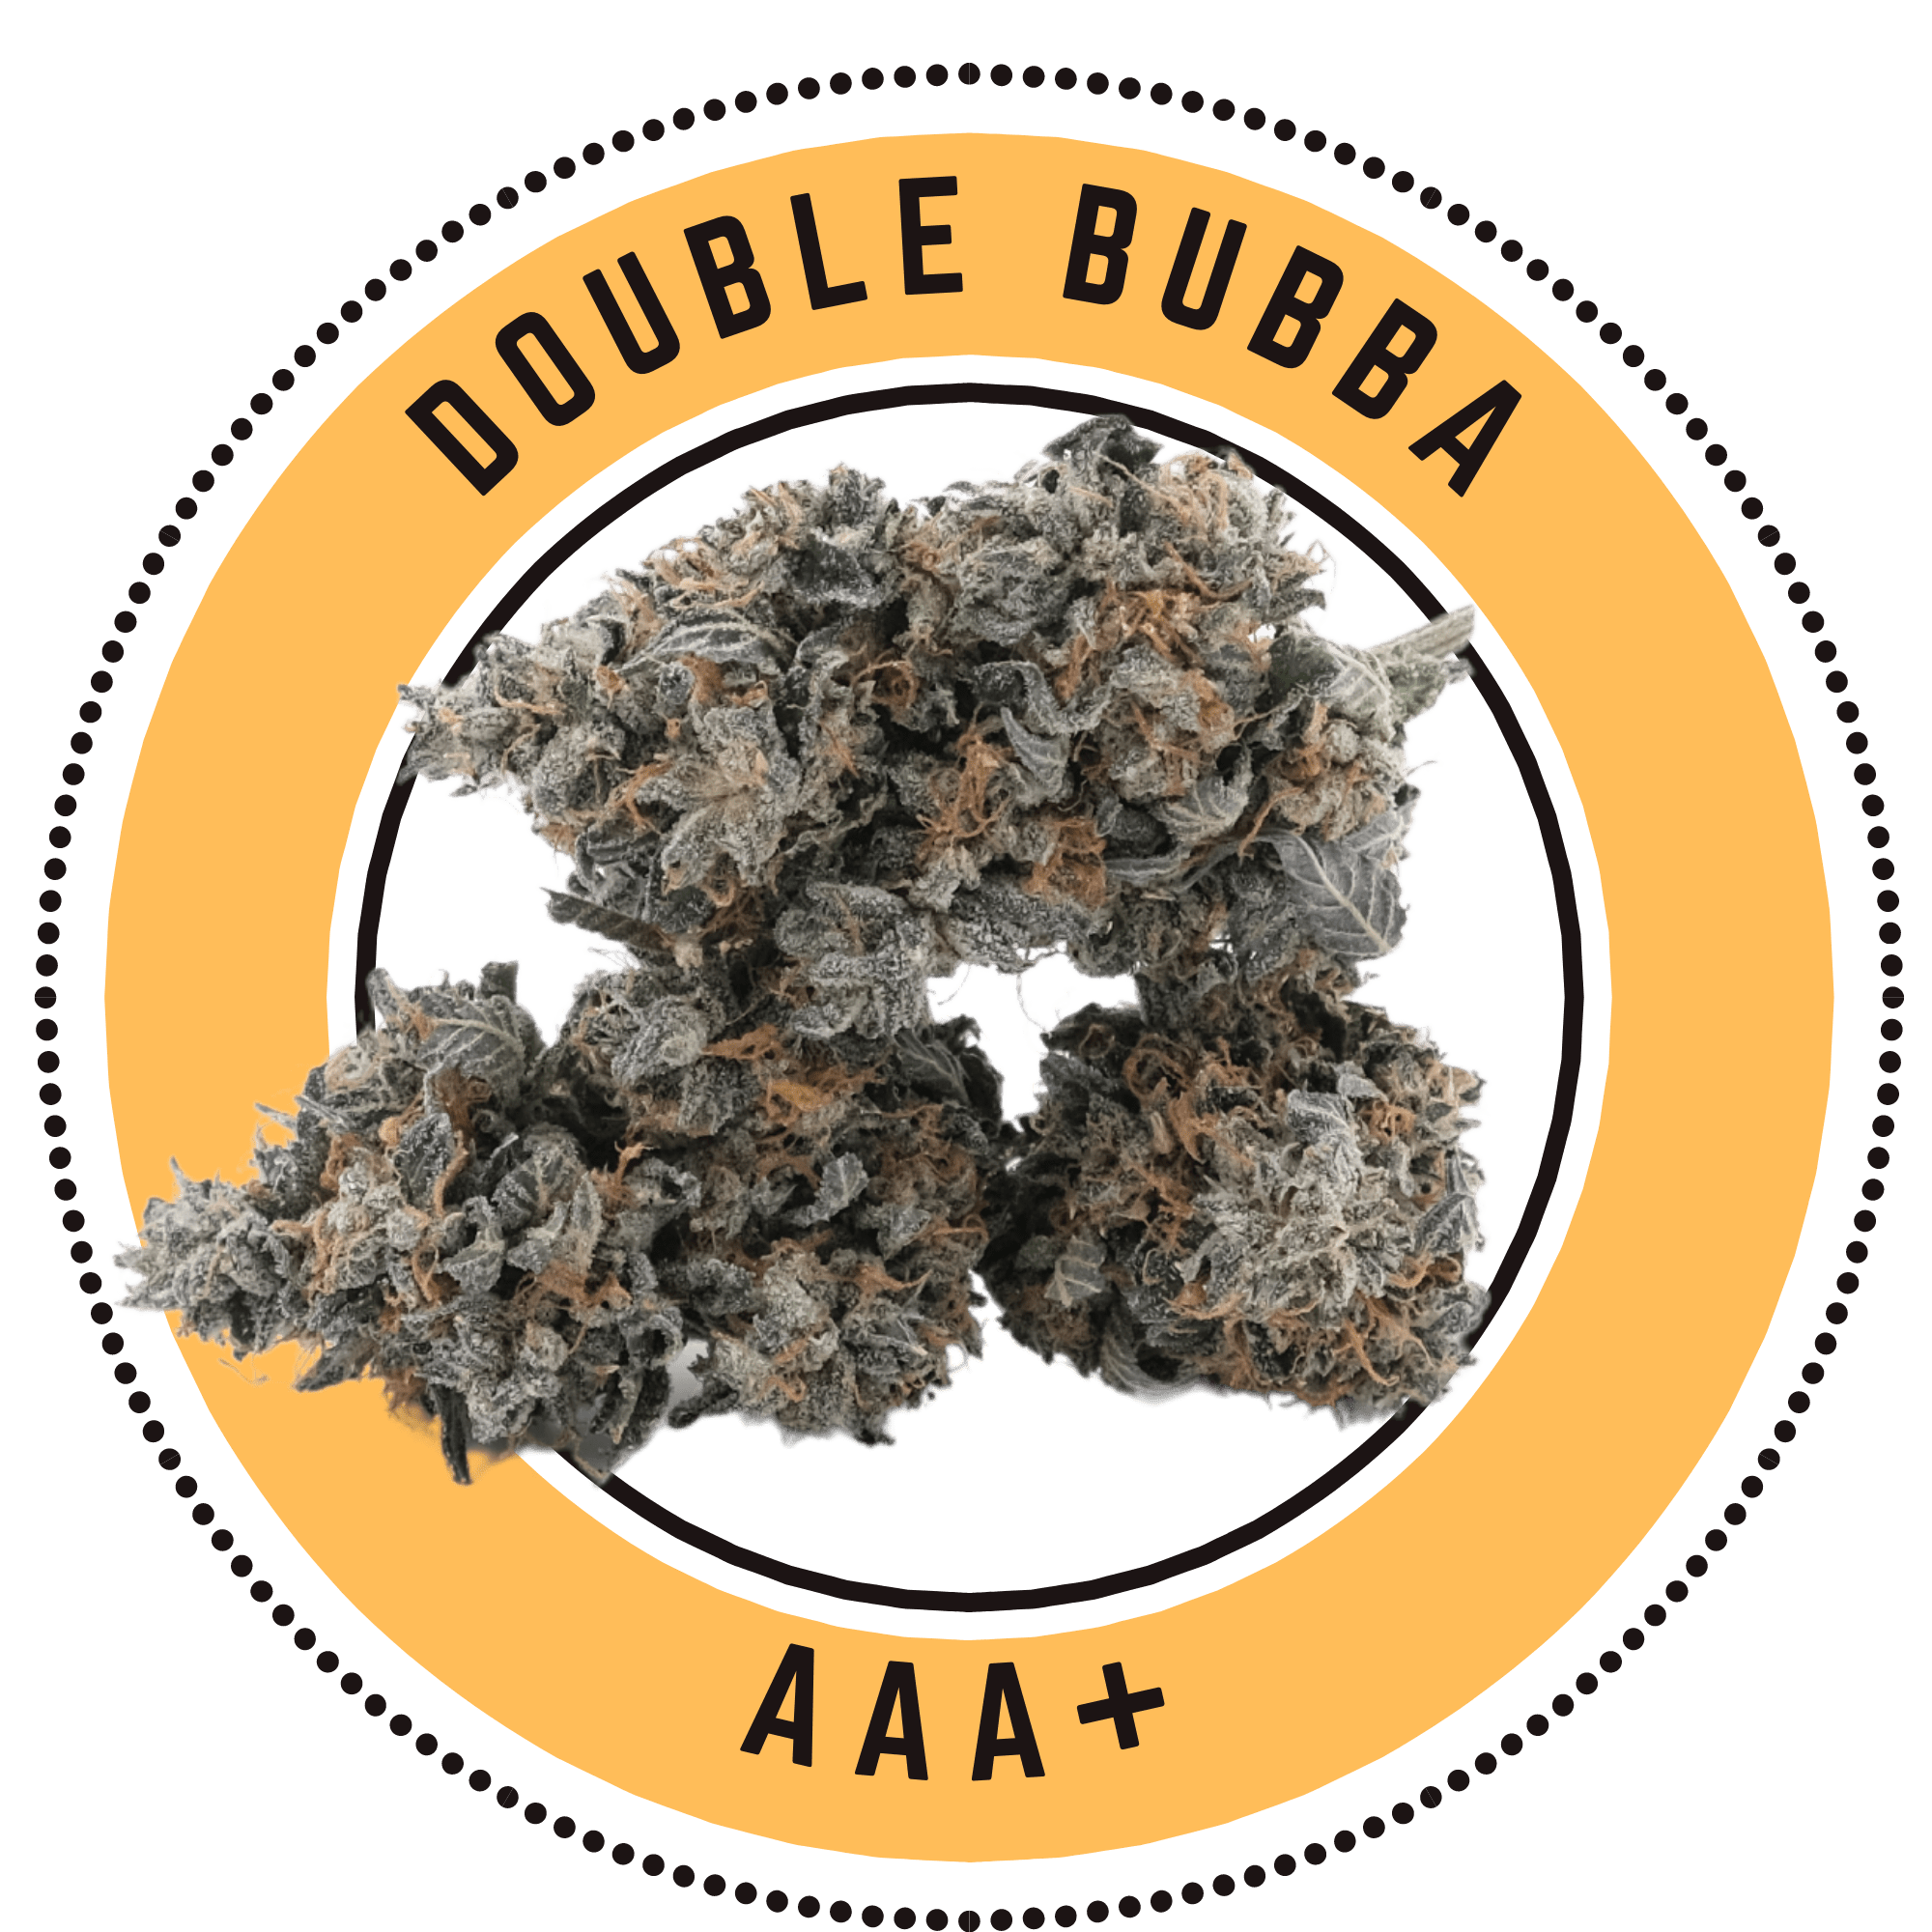 Double Bubba – Prerolls